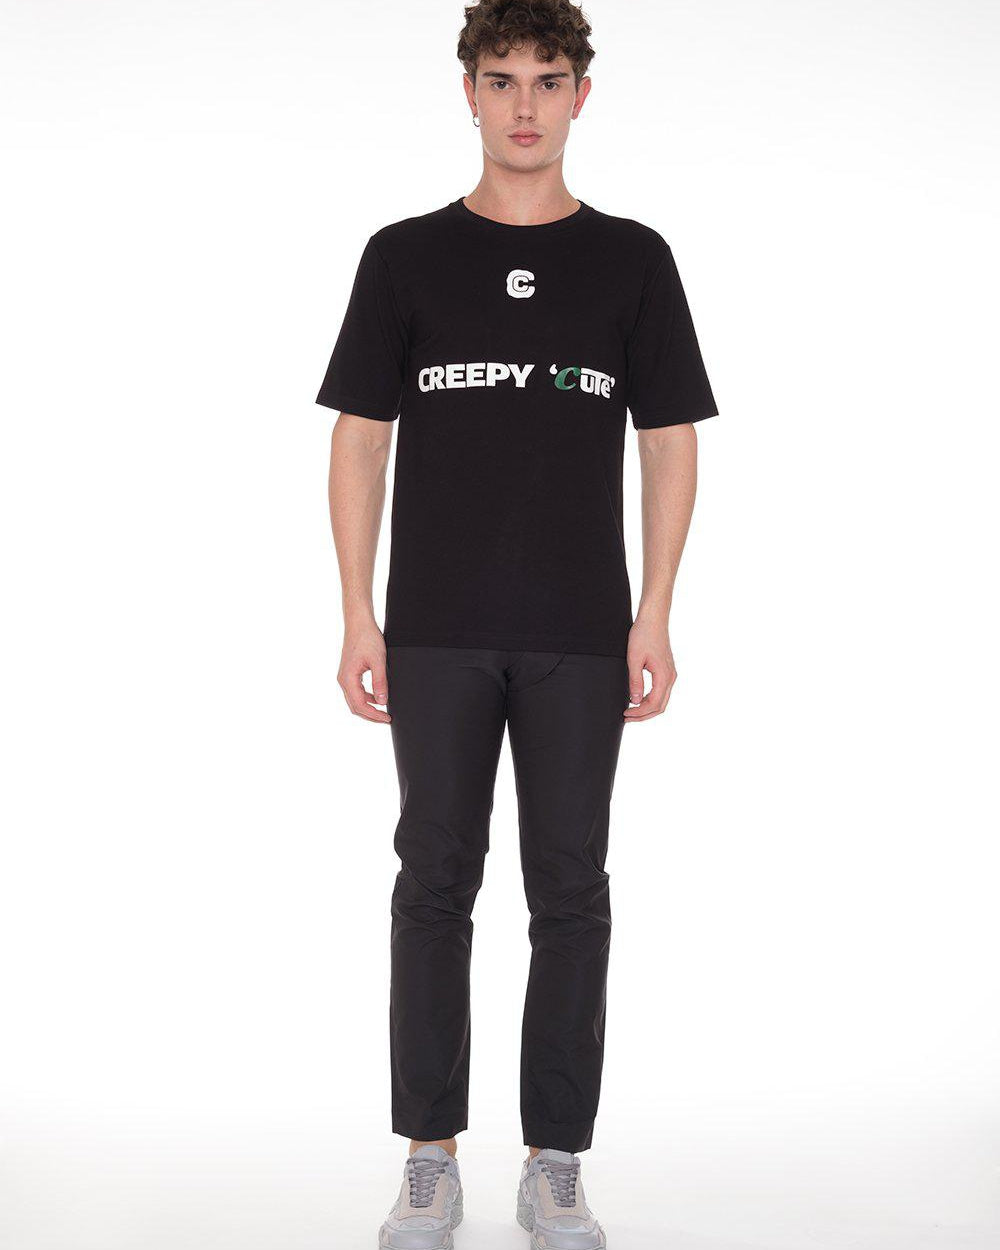 Shop - Xander Zhou Black Creepy Cute T-Shirt | Elevastor